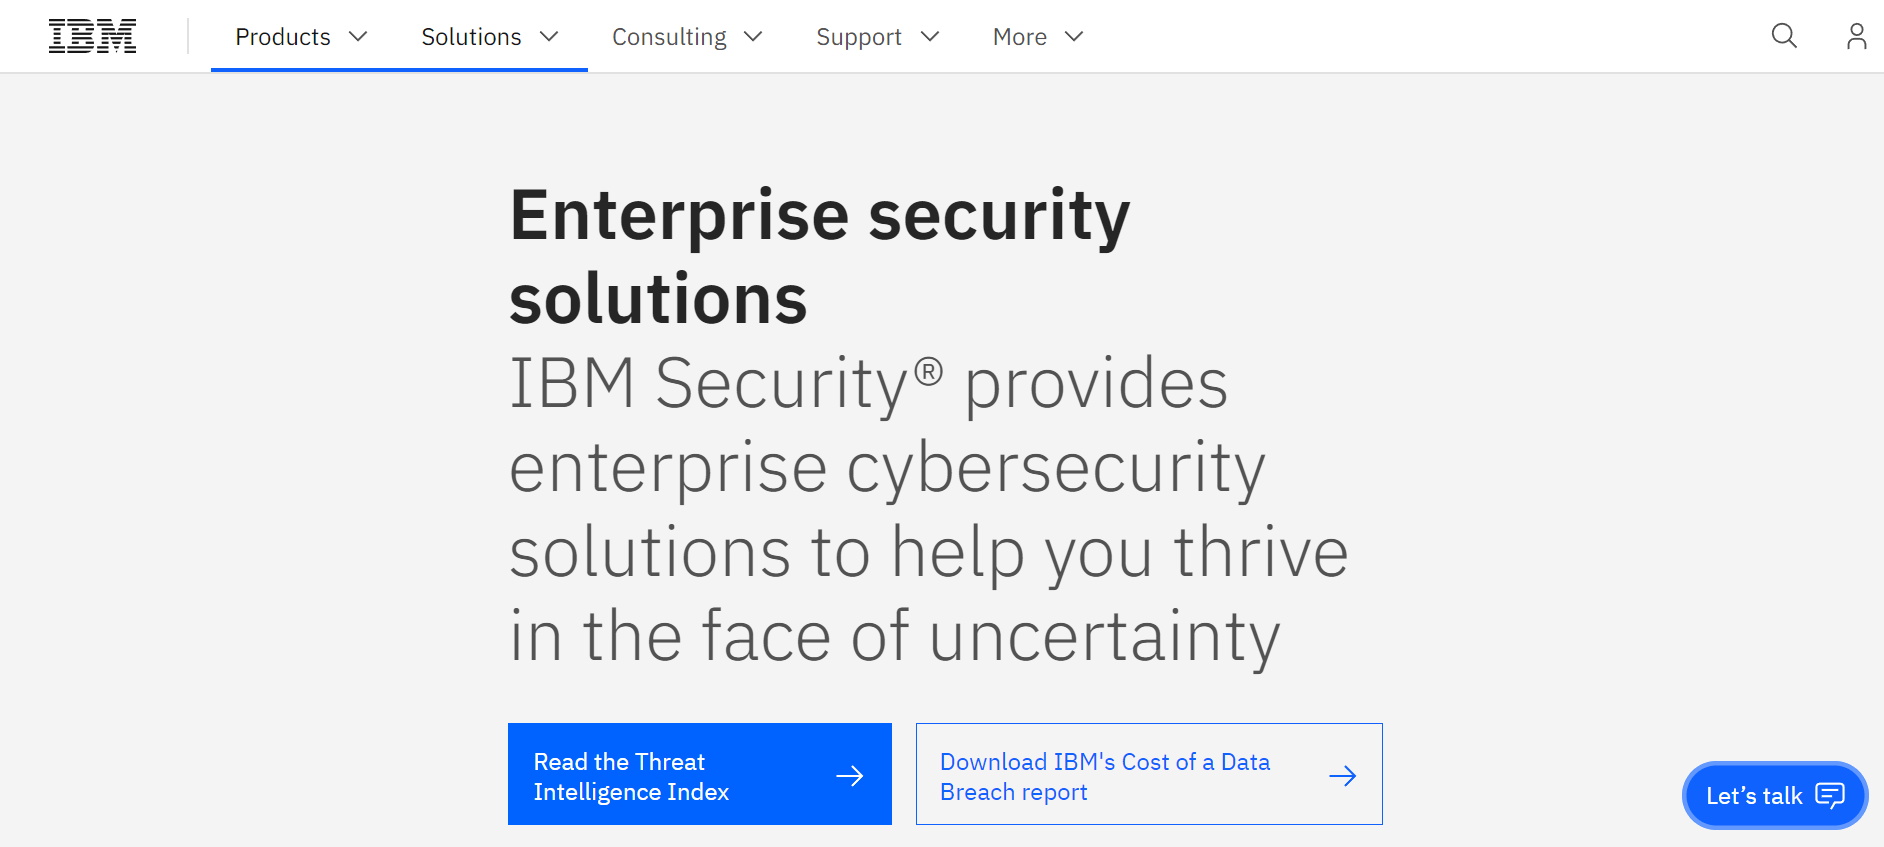 IBM Enterprise Security Solutions homepage